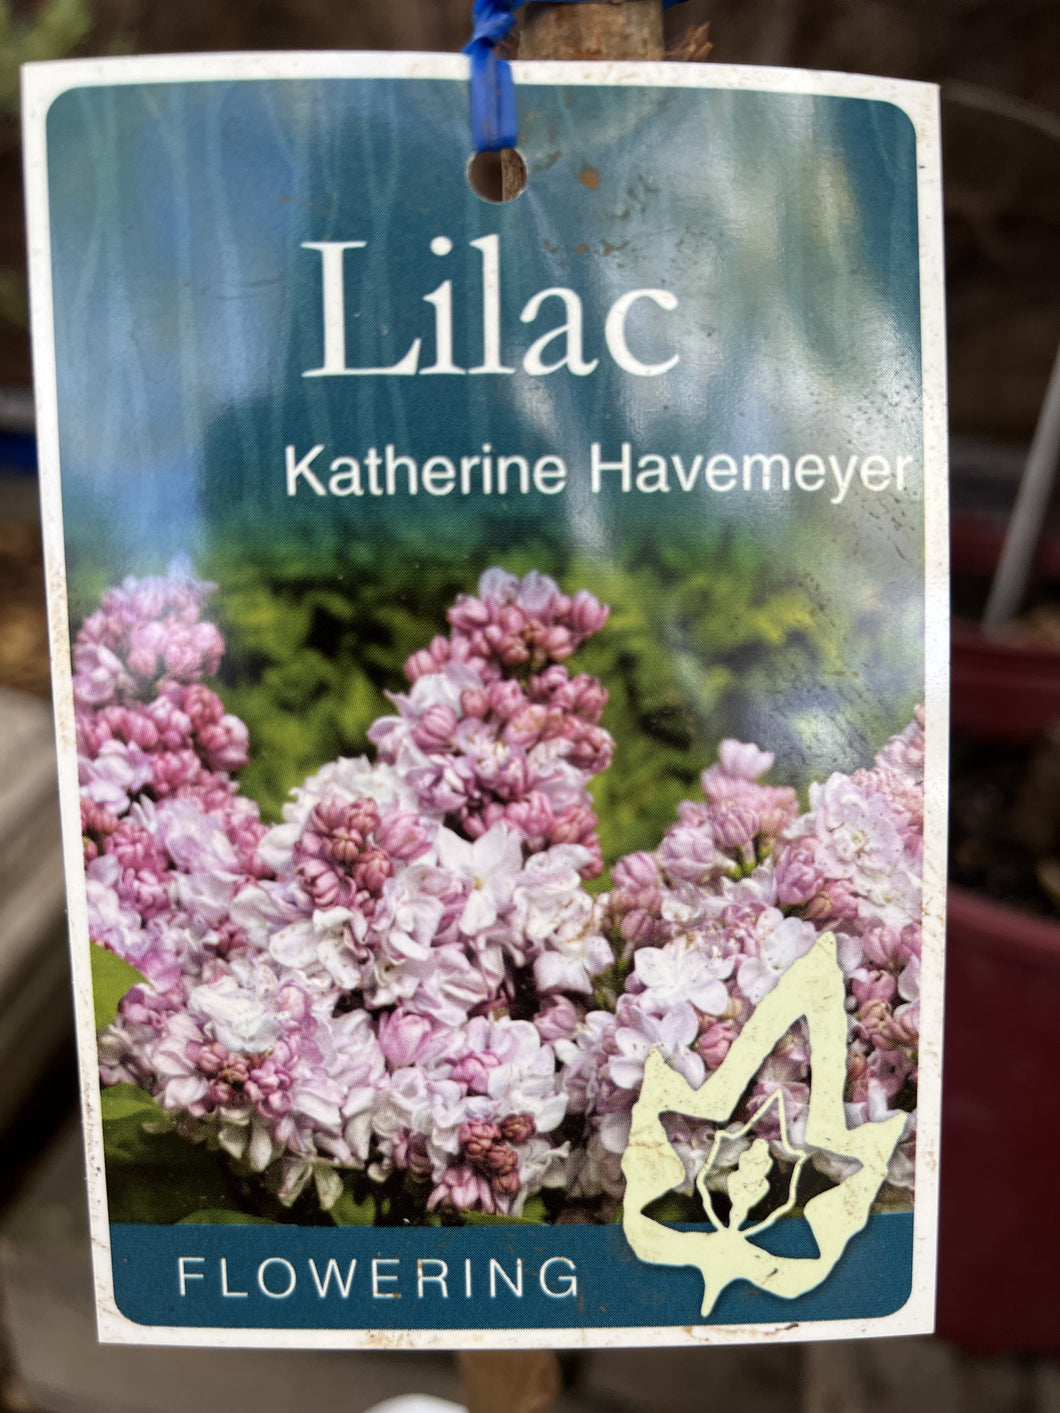 Syringa vulgaris 'Katherine Havemeyer' (Lilac)